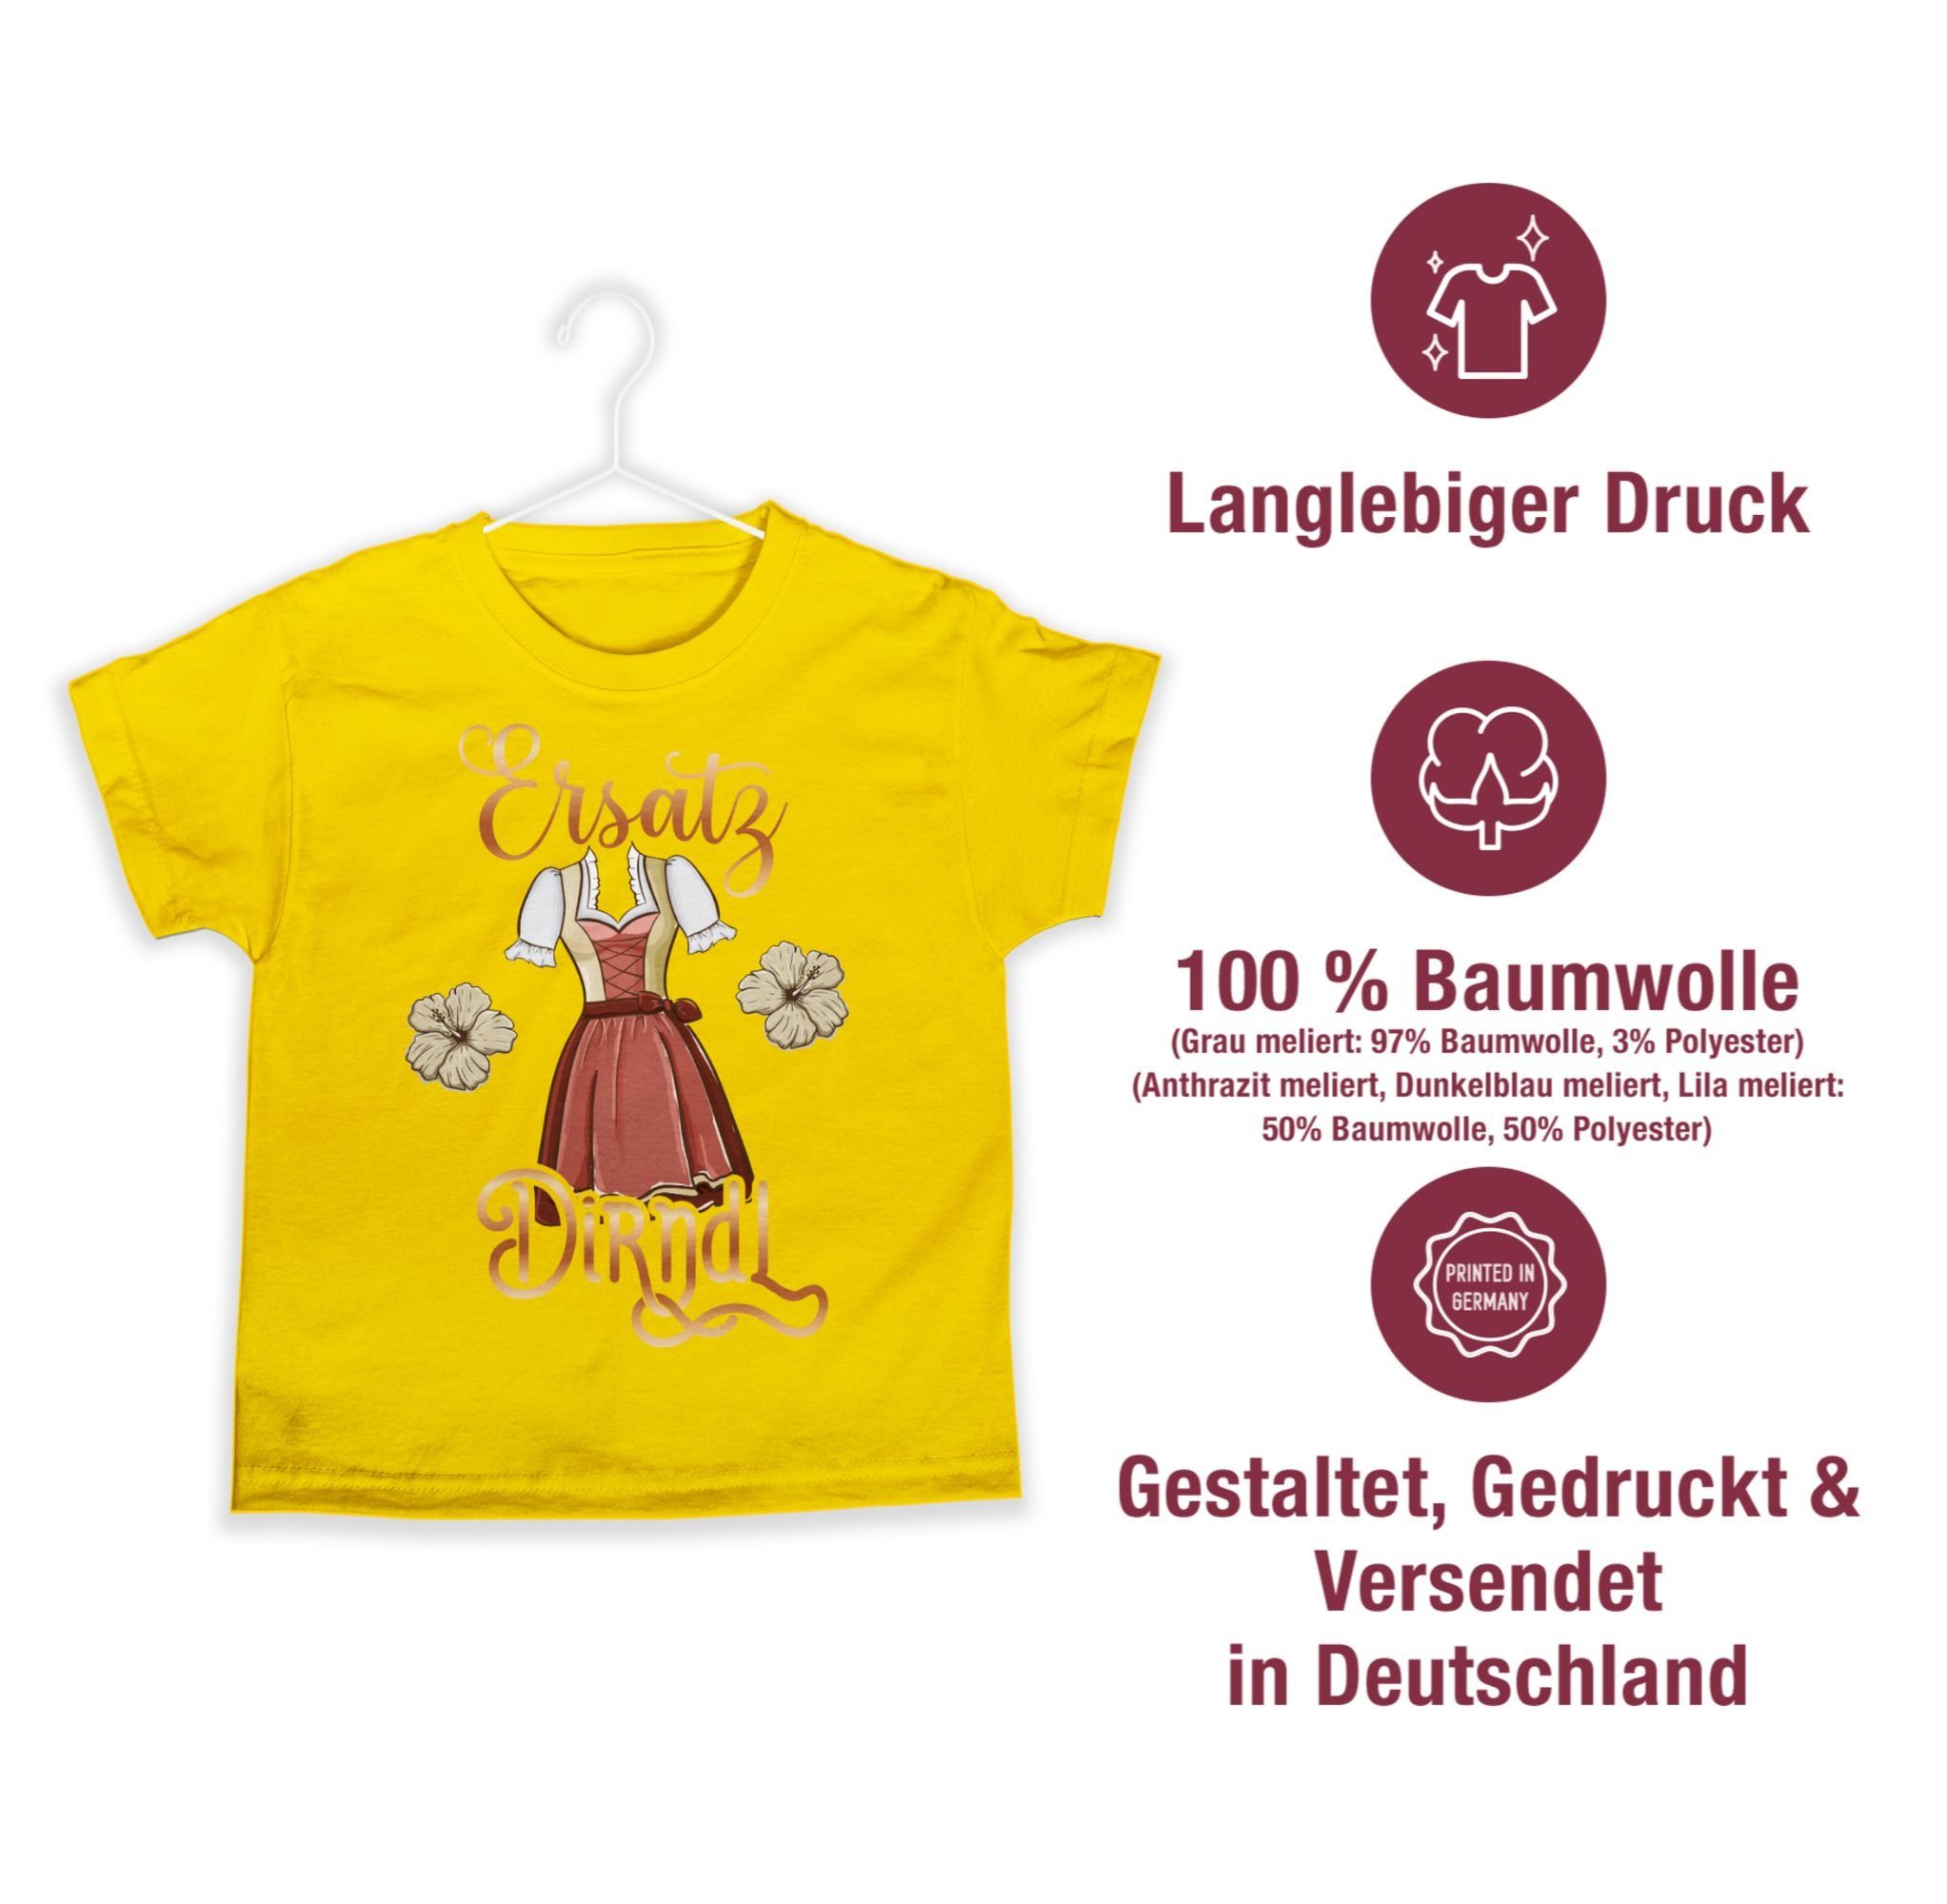 Ersatz 01 Gelb für Mode Shirtracer Oktoberfest Dirndl Kinder Outfit T-Shirt Tracht